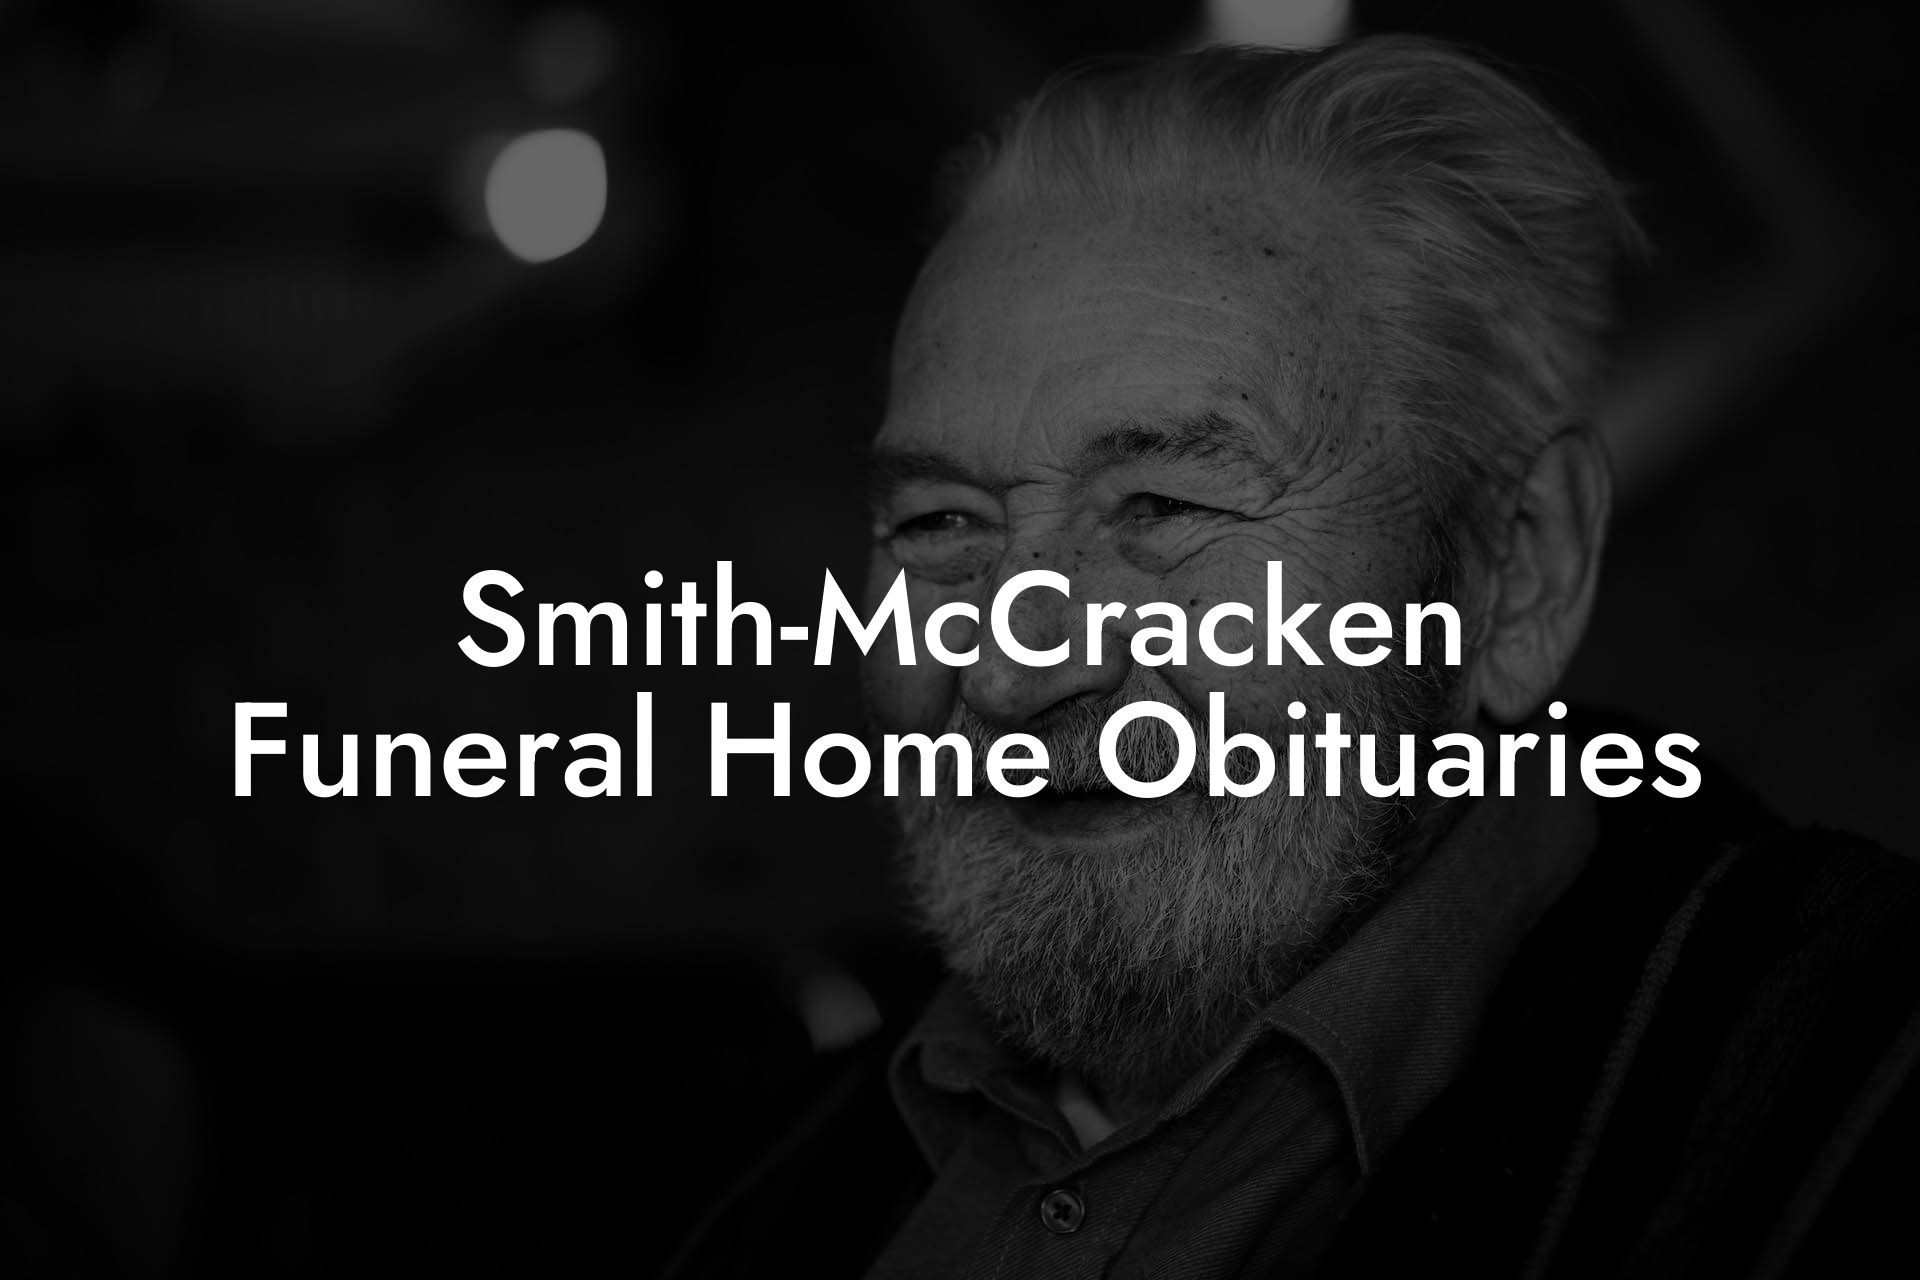 Smith-McCracken Funeral Home Obituaries